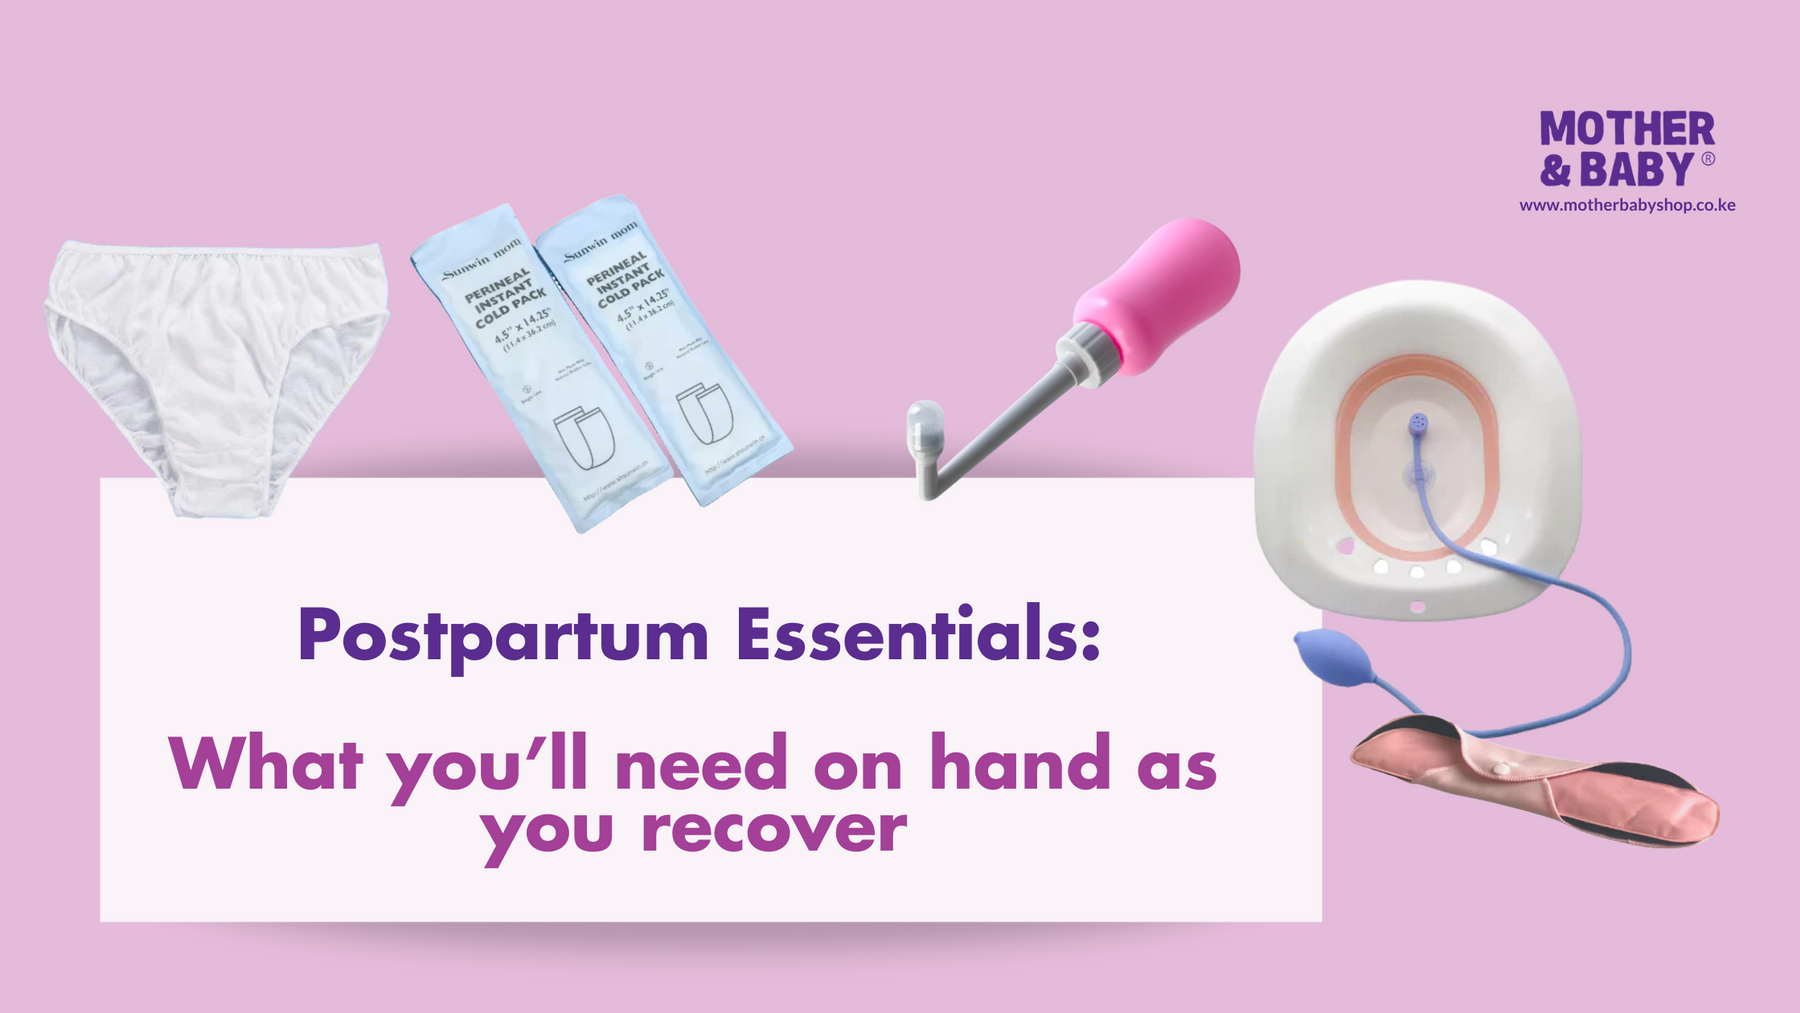 Postpartum essentials by motherbabyshop.co.ke